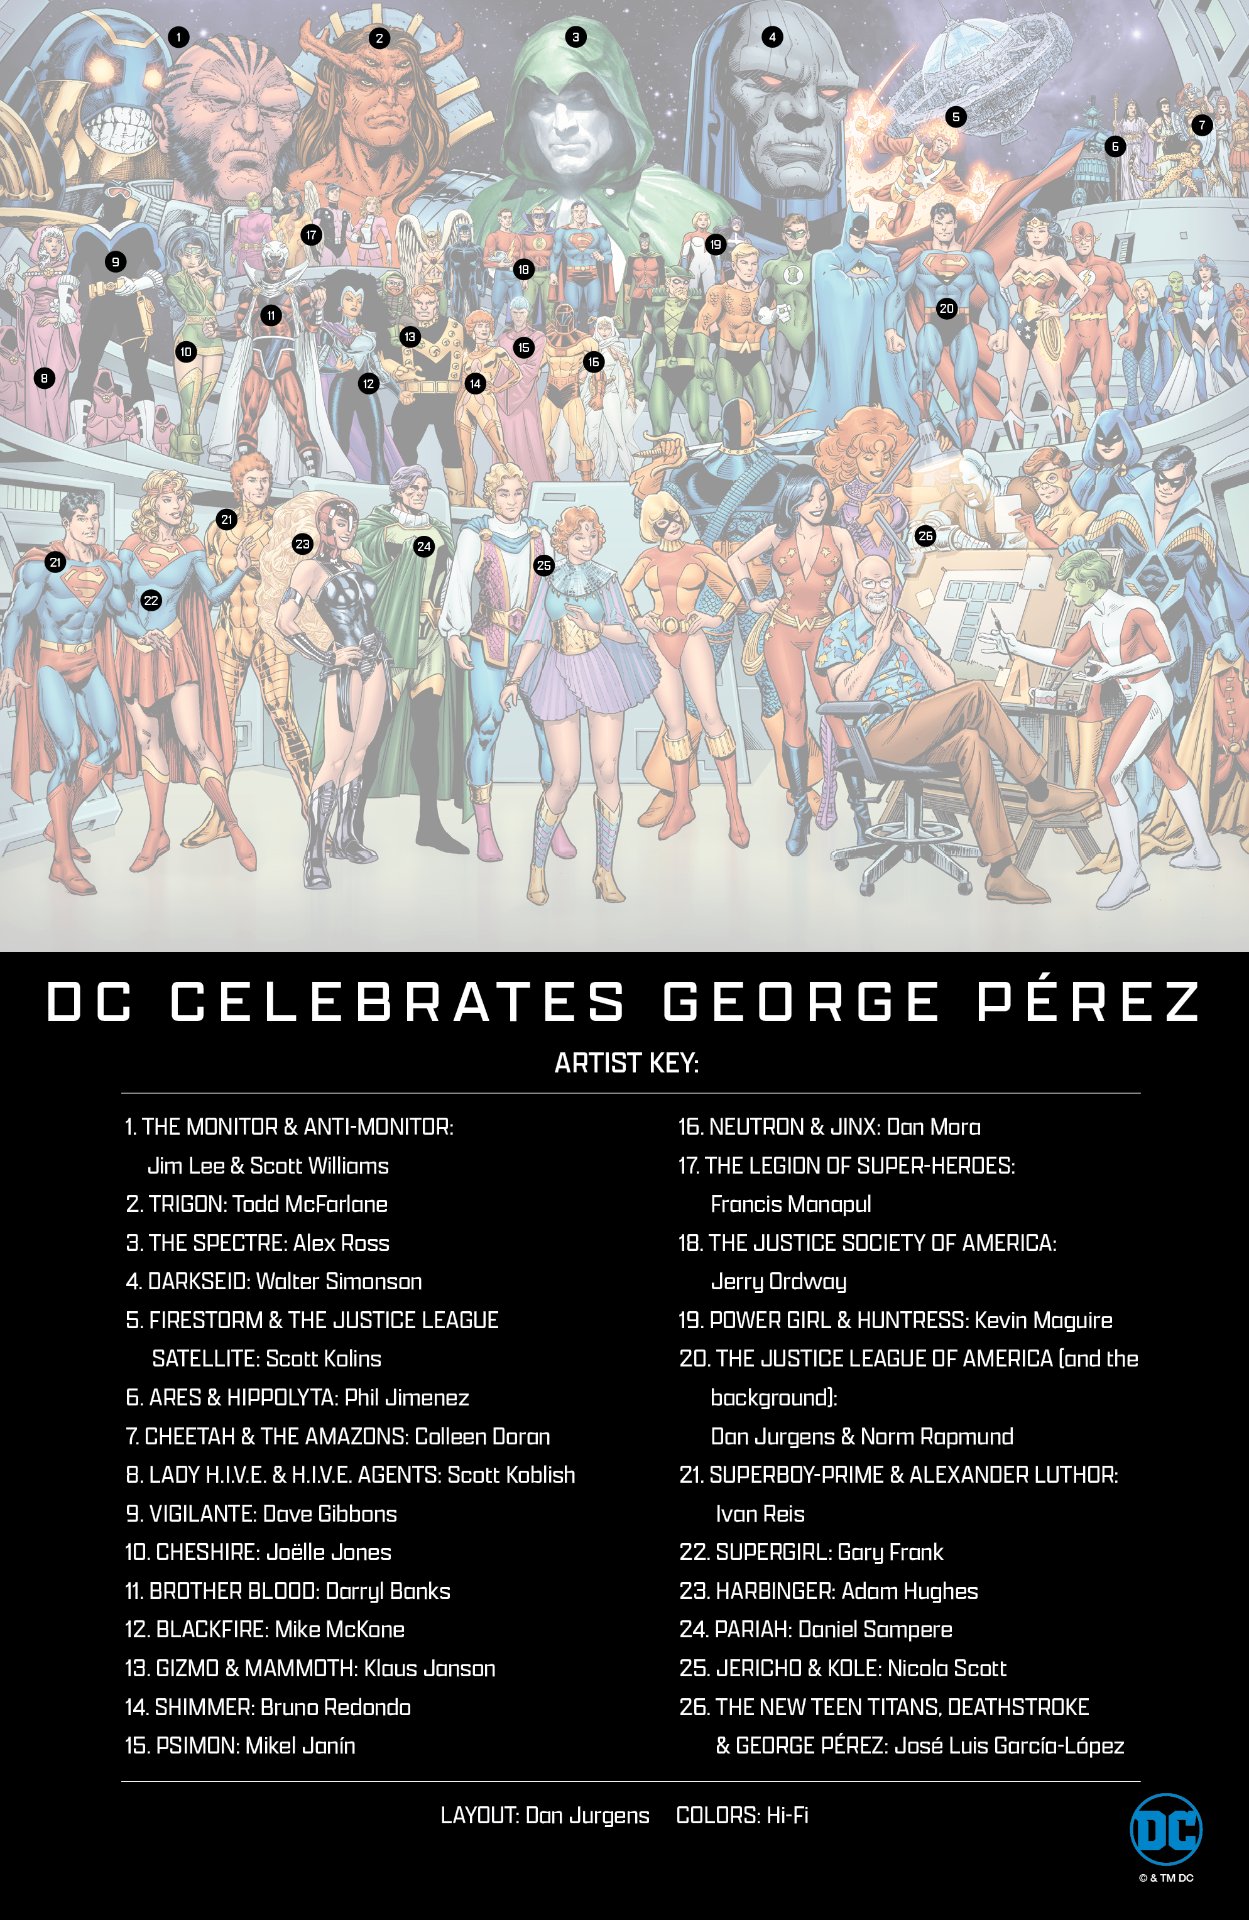 DC's George Pérez tribute image